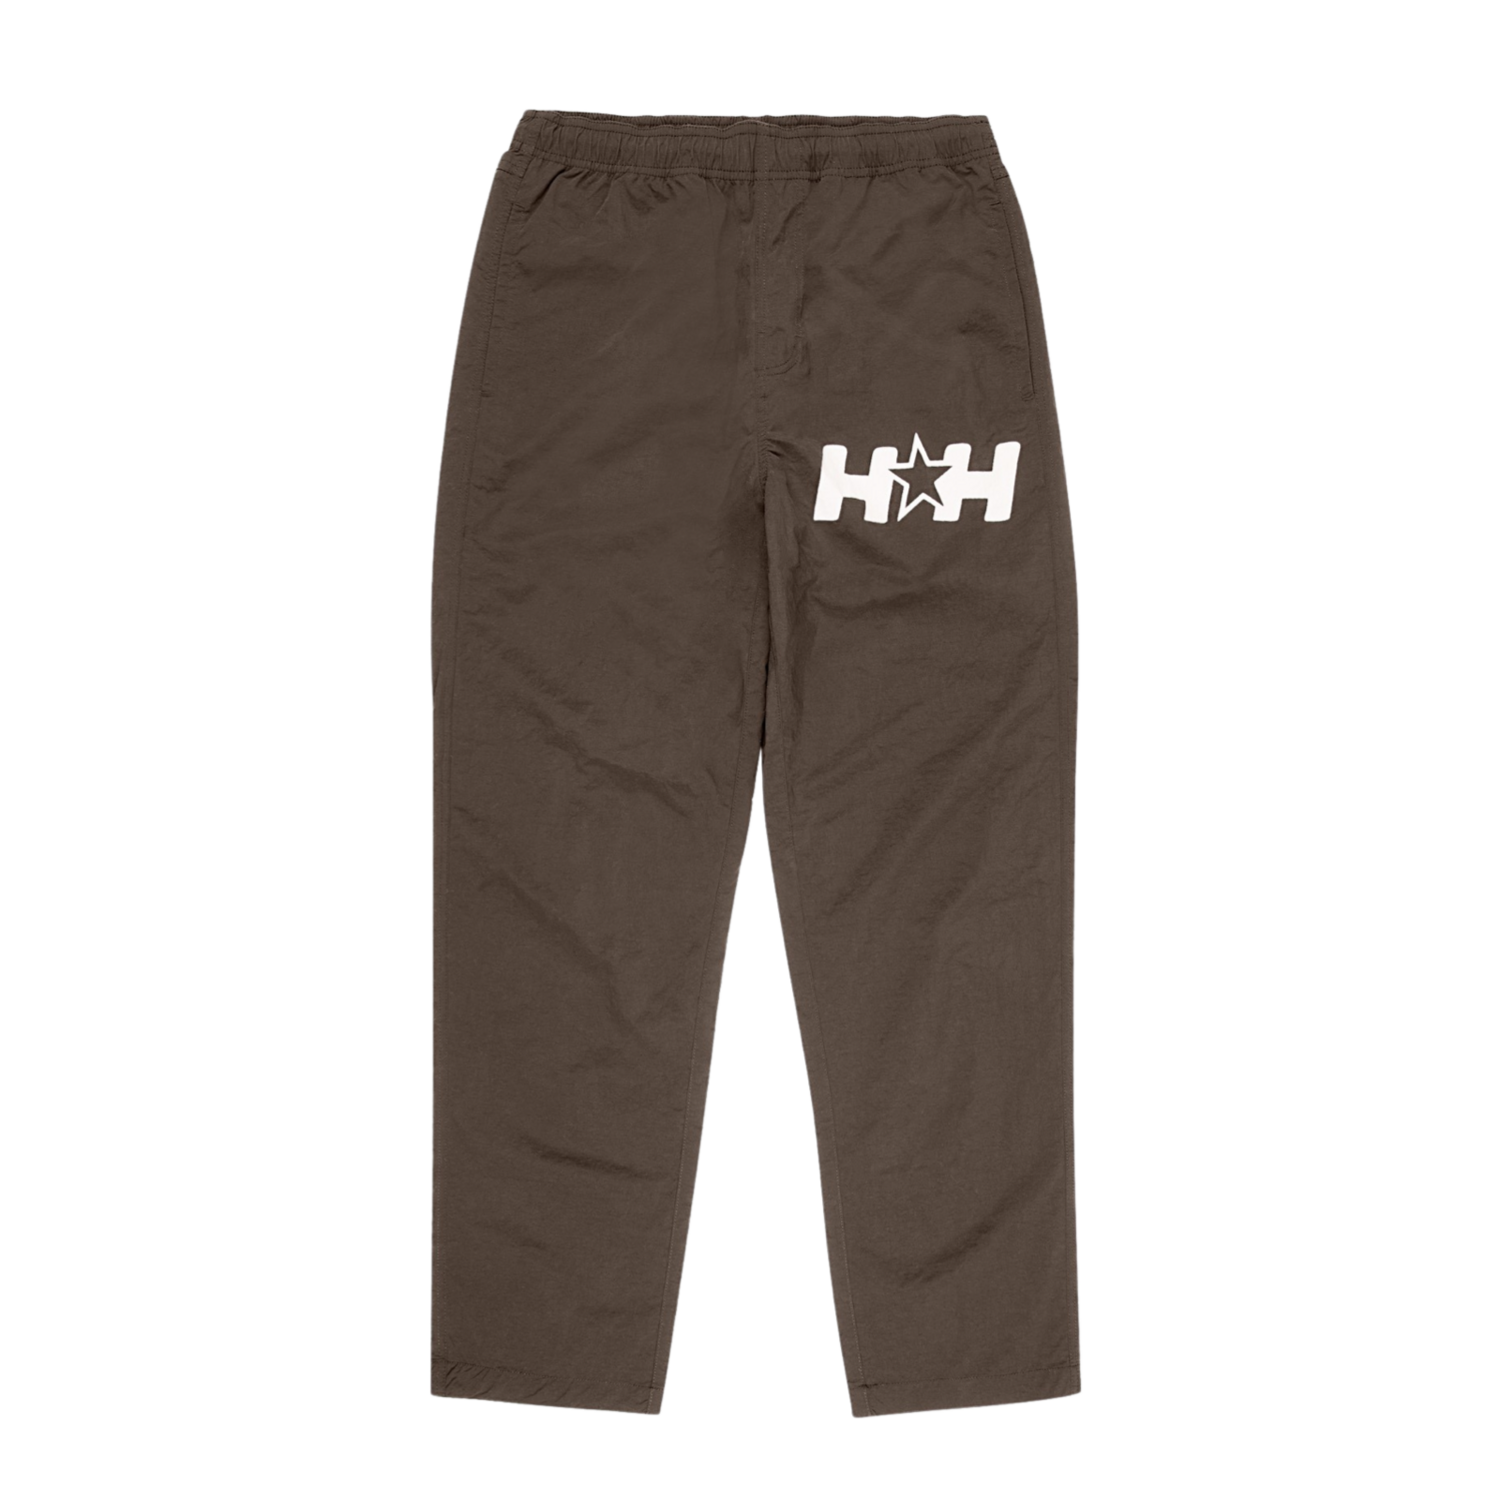 HH Star Nylon Pants (Brown/Cream)